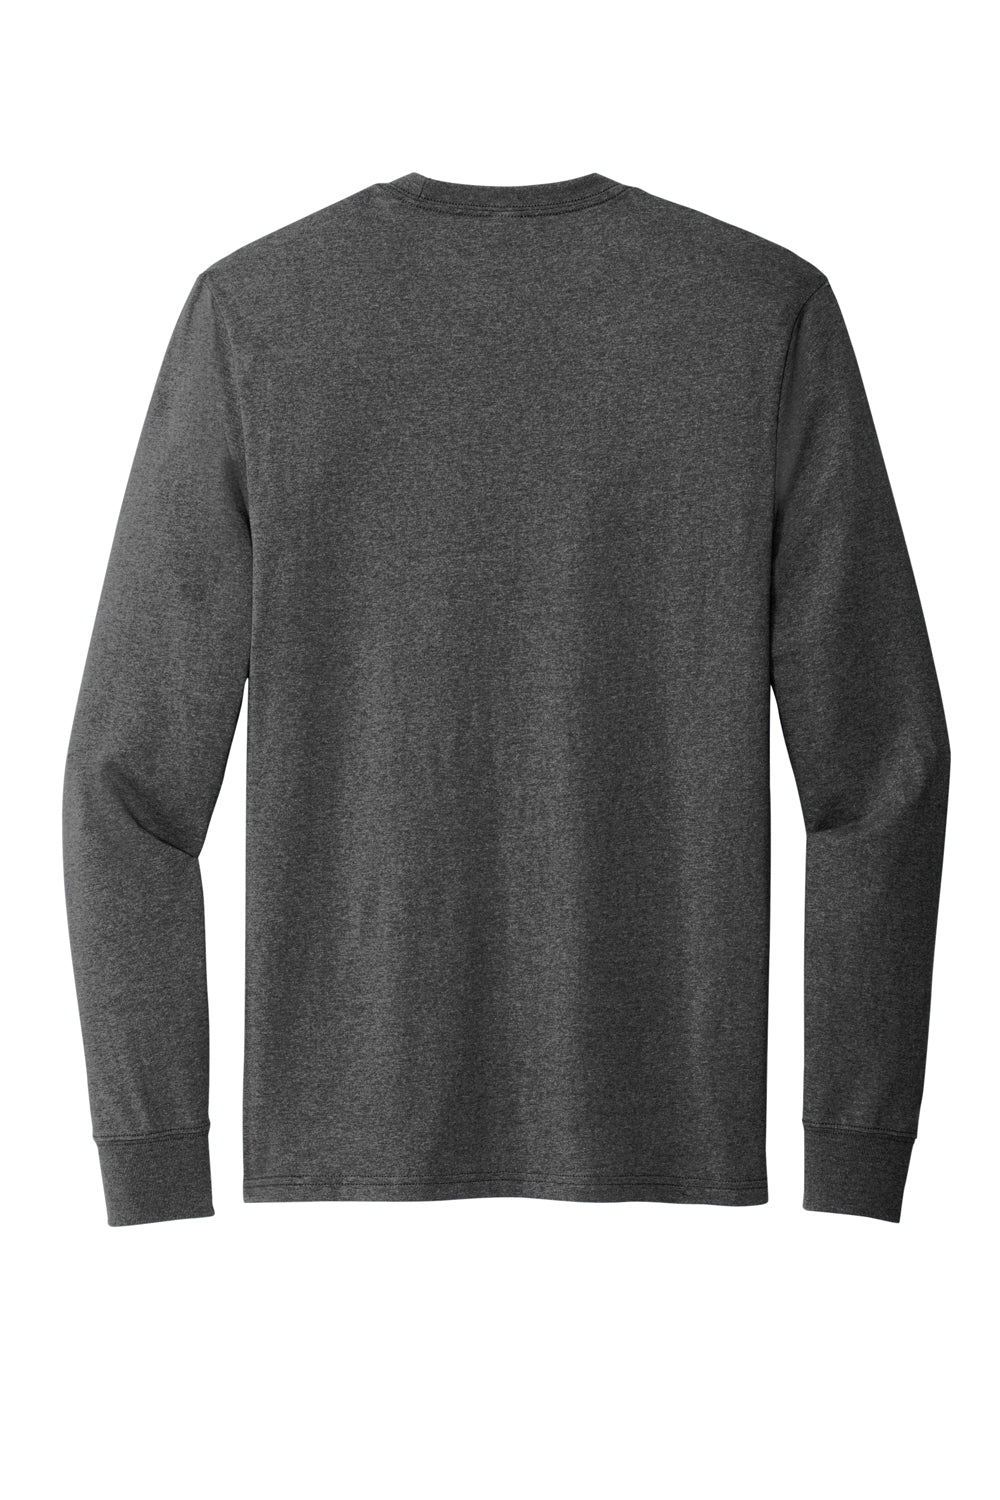 Allmade AL6204 Mens Recycled Long Sleeve Crewneck T-Shirt Heather Charcoal Grey Flat Back